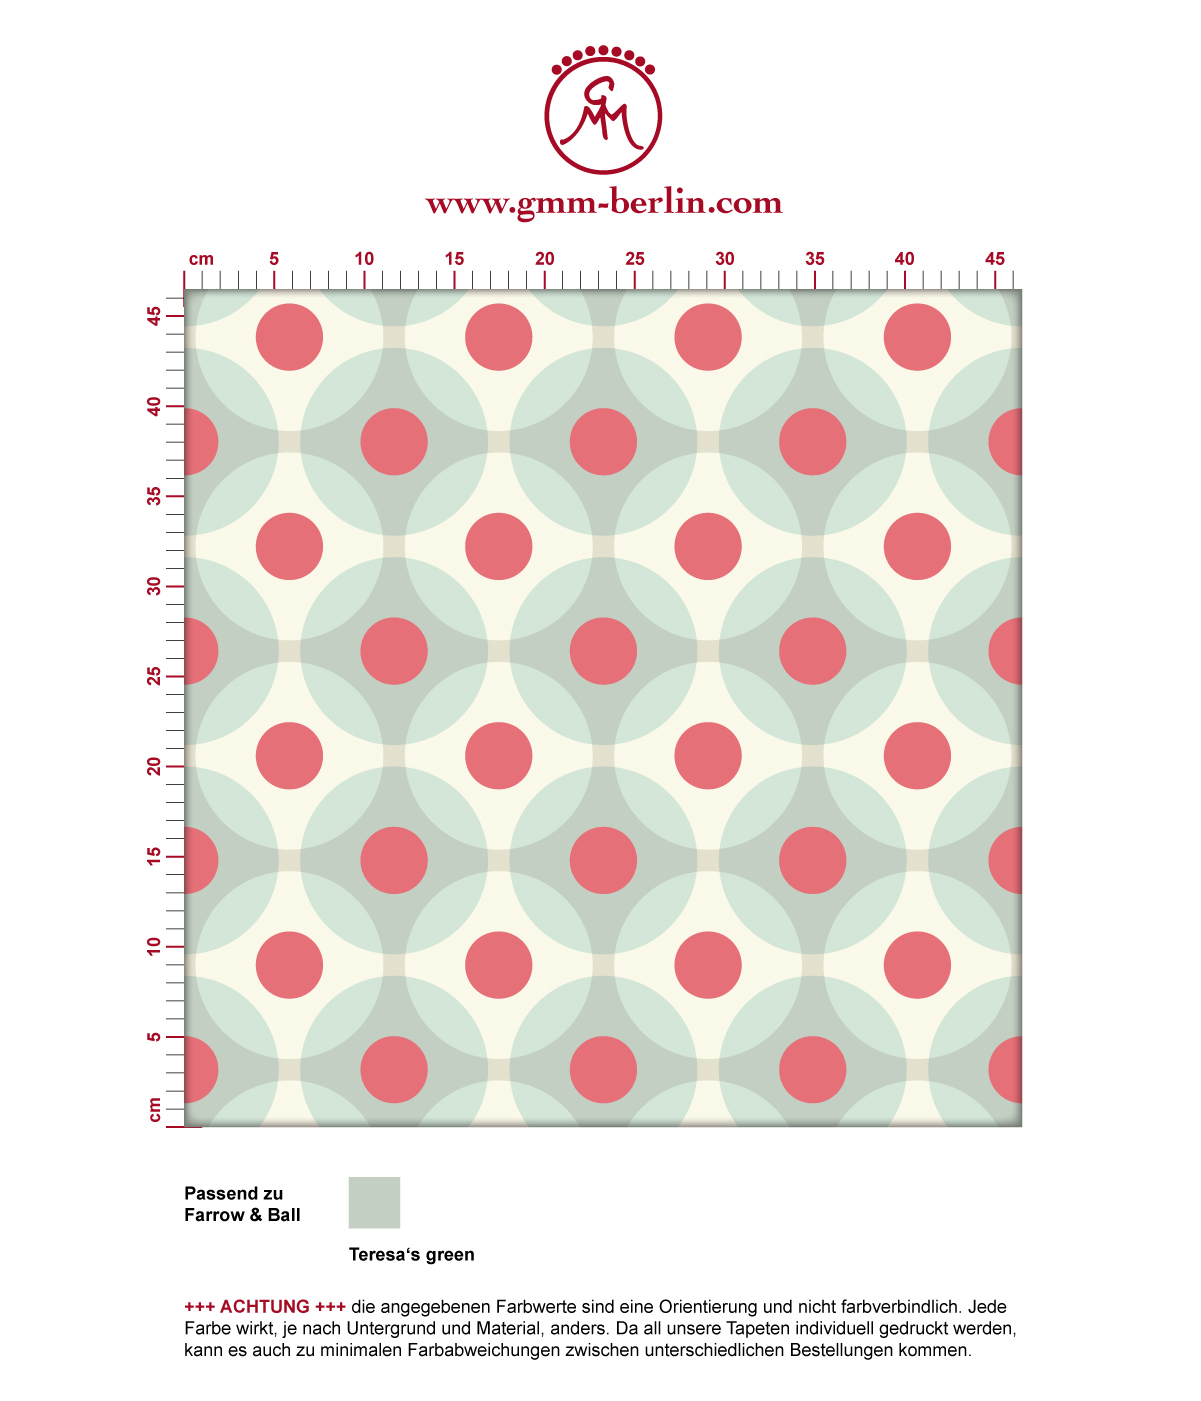 Moderne Retro Tapete "Flower Dots" mit großen Punkten in türkis angepasst an Farrow and Ball Wandfarben. Aus dem GMM-BERLIN.com Sortiment: Schöne Tapeten in creme Farbe